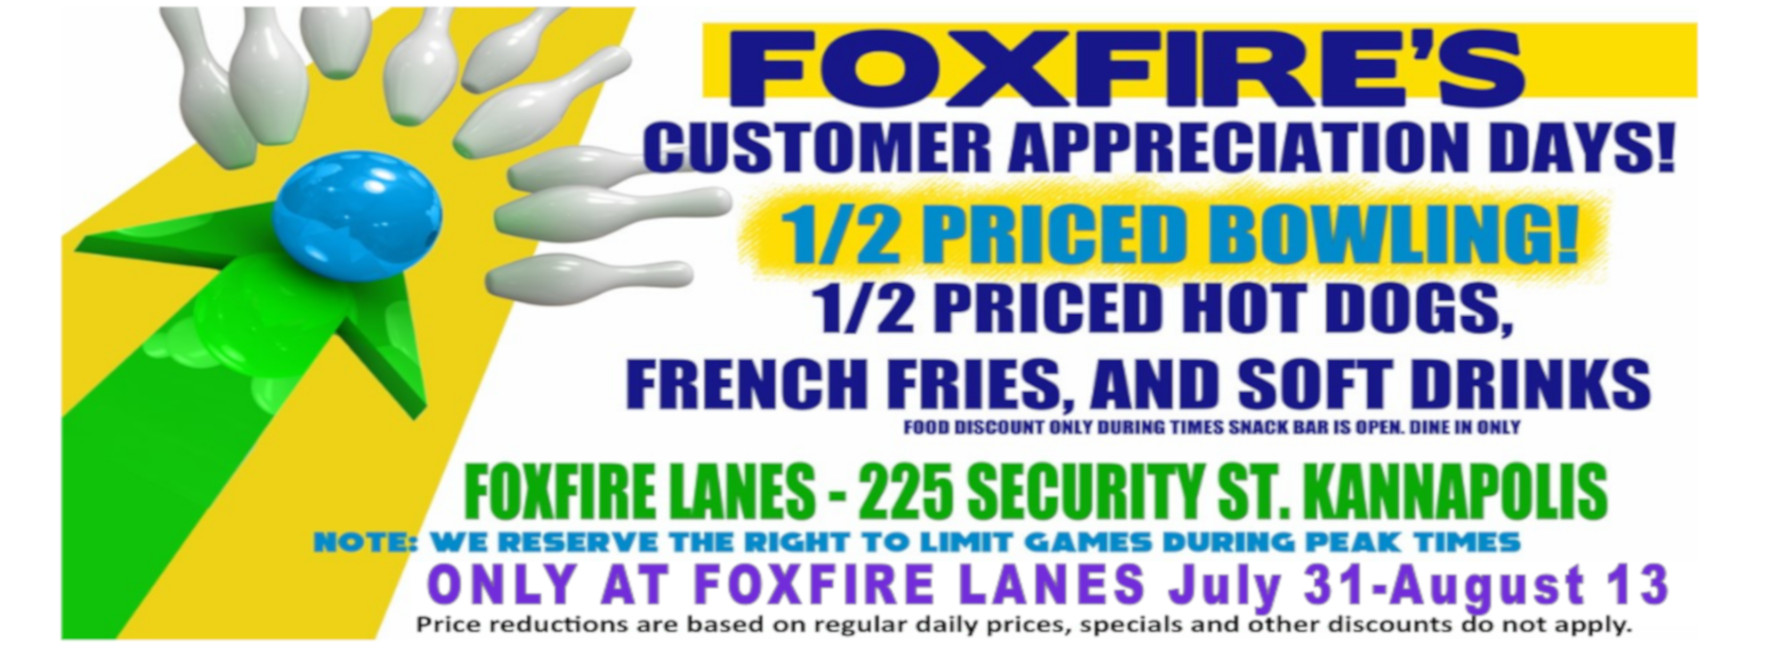 Foxfire Lanes banner image